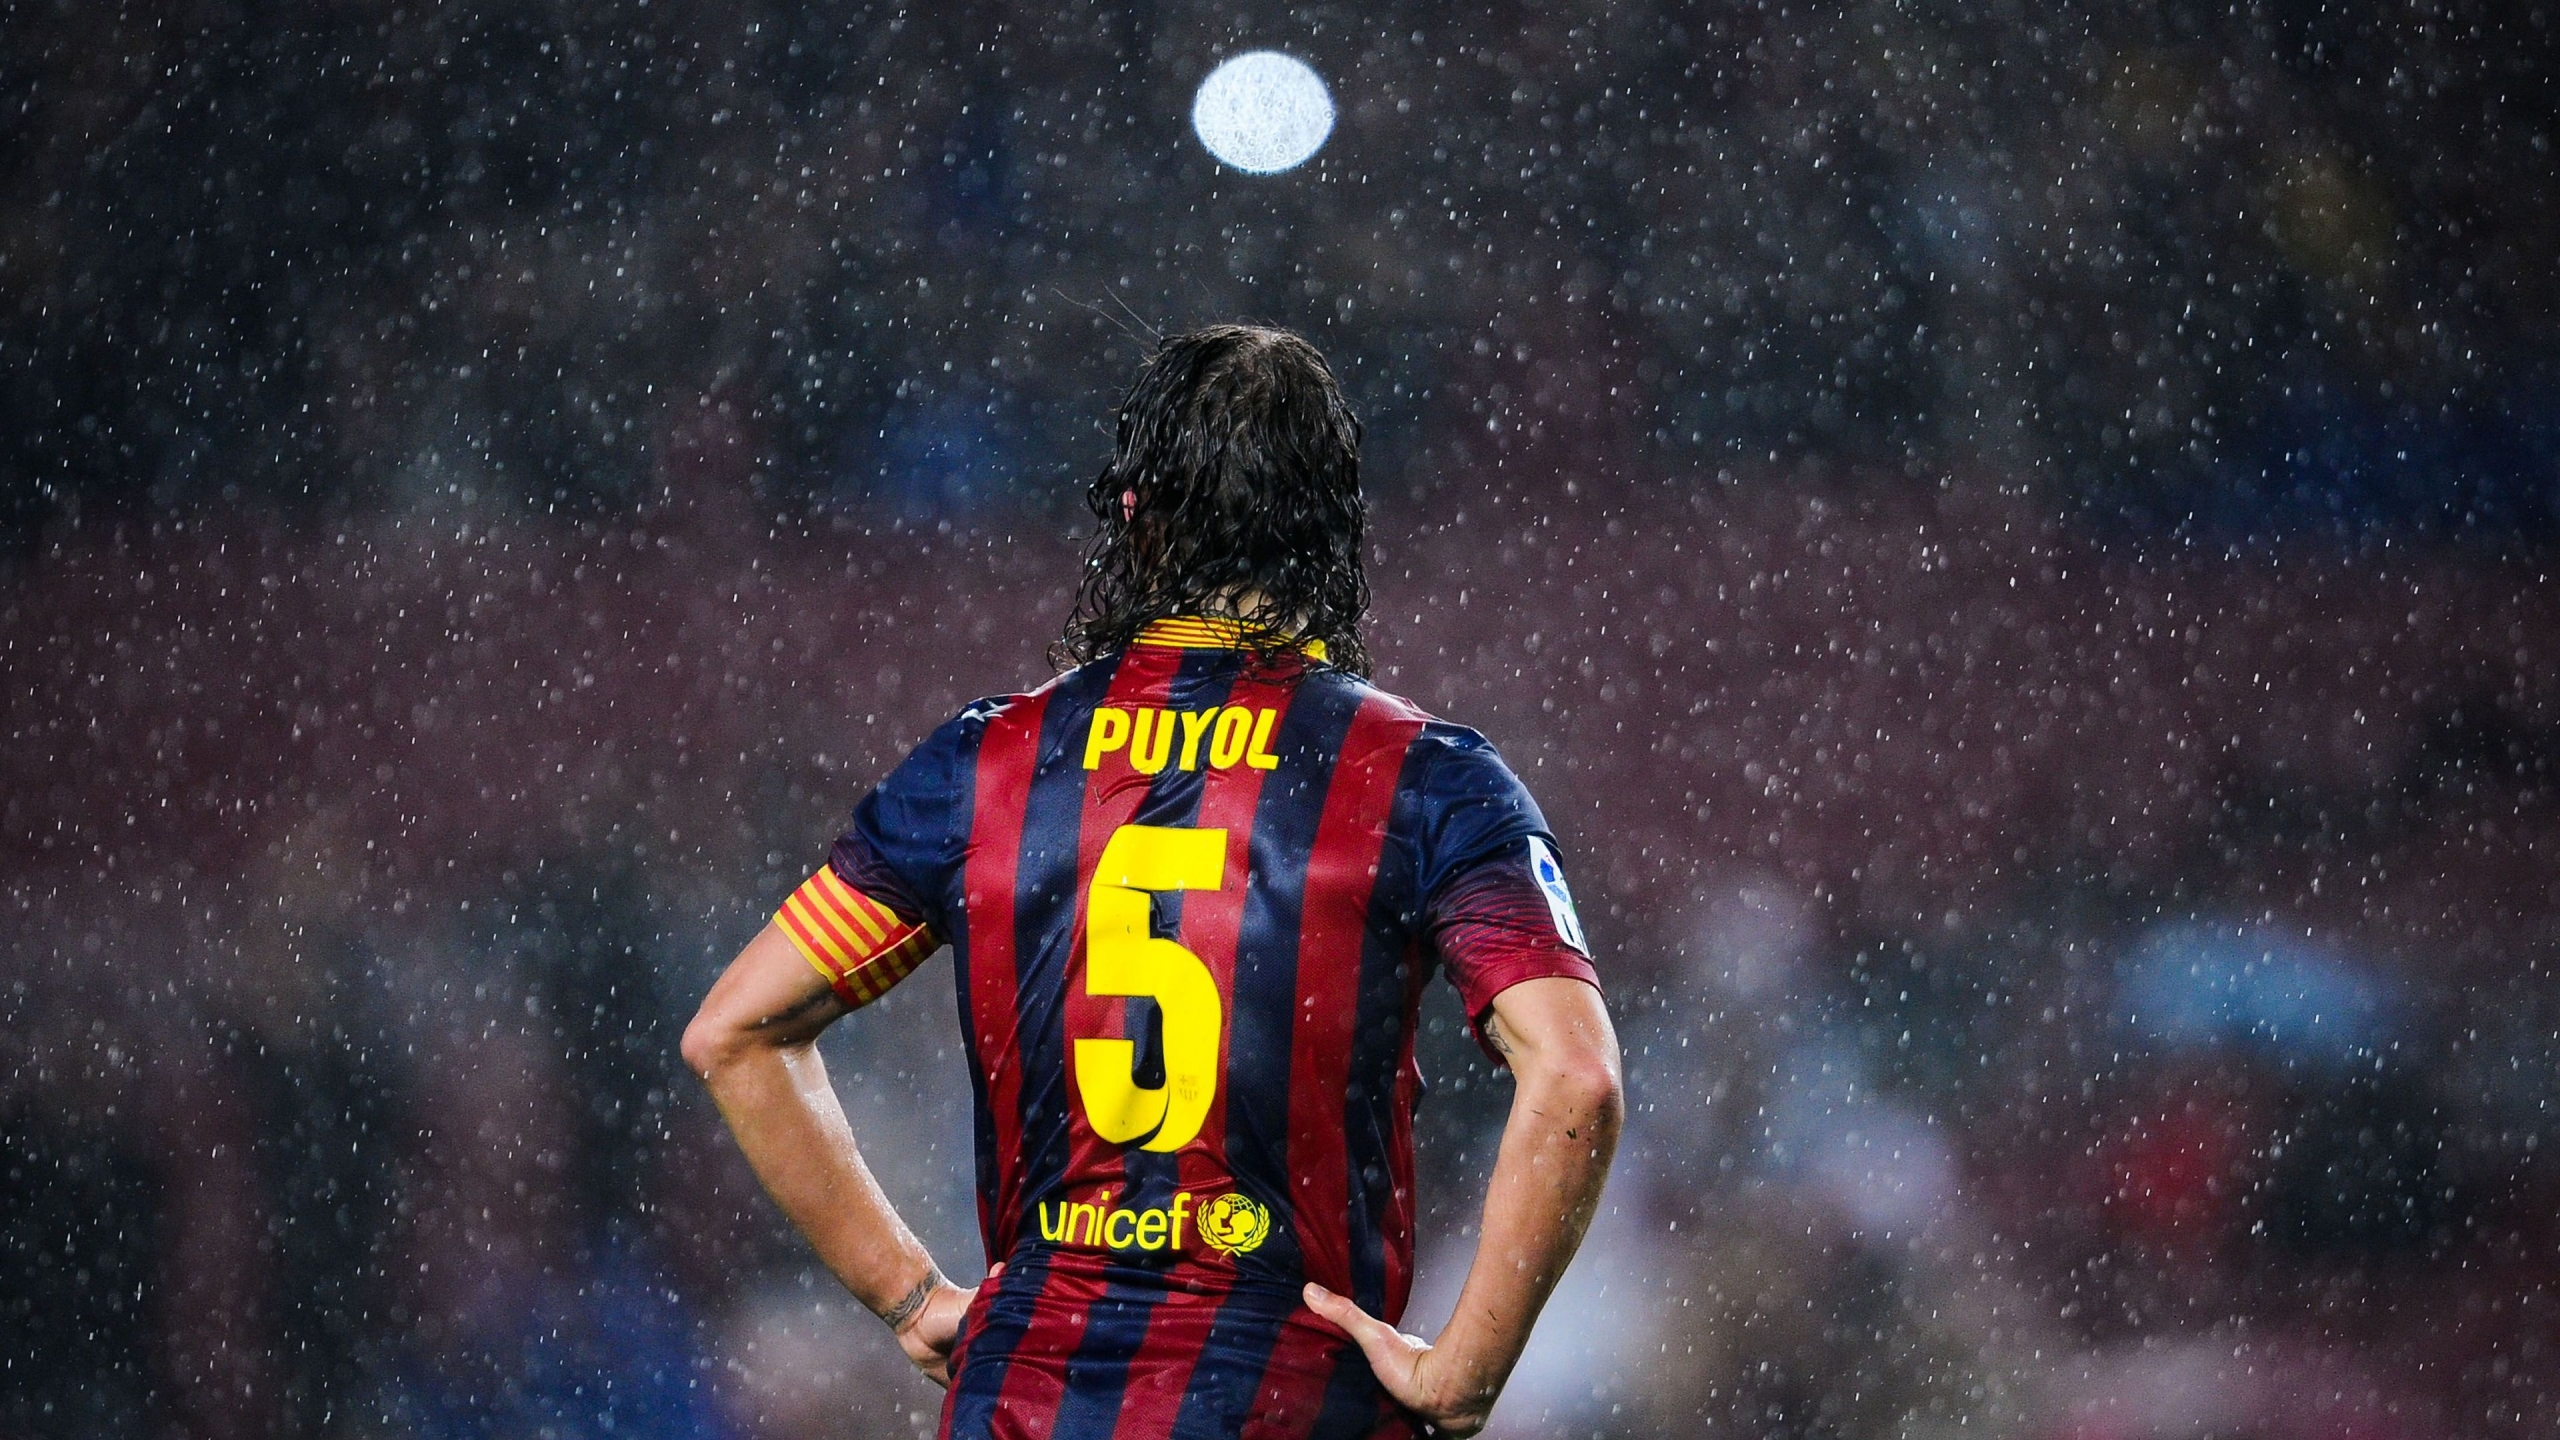 Carles Puyol Rain for 2560x1440 HDTV resolution